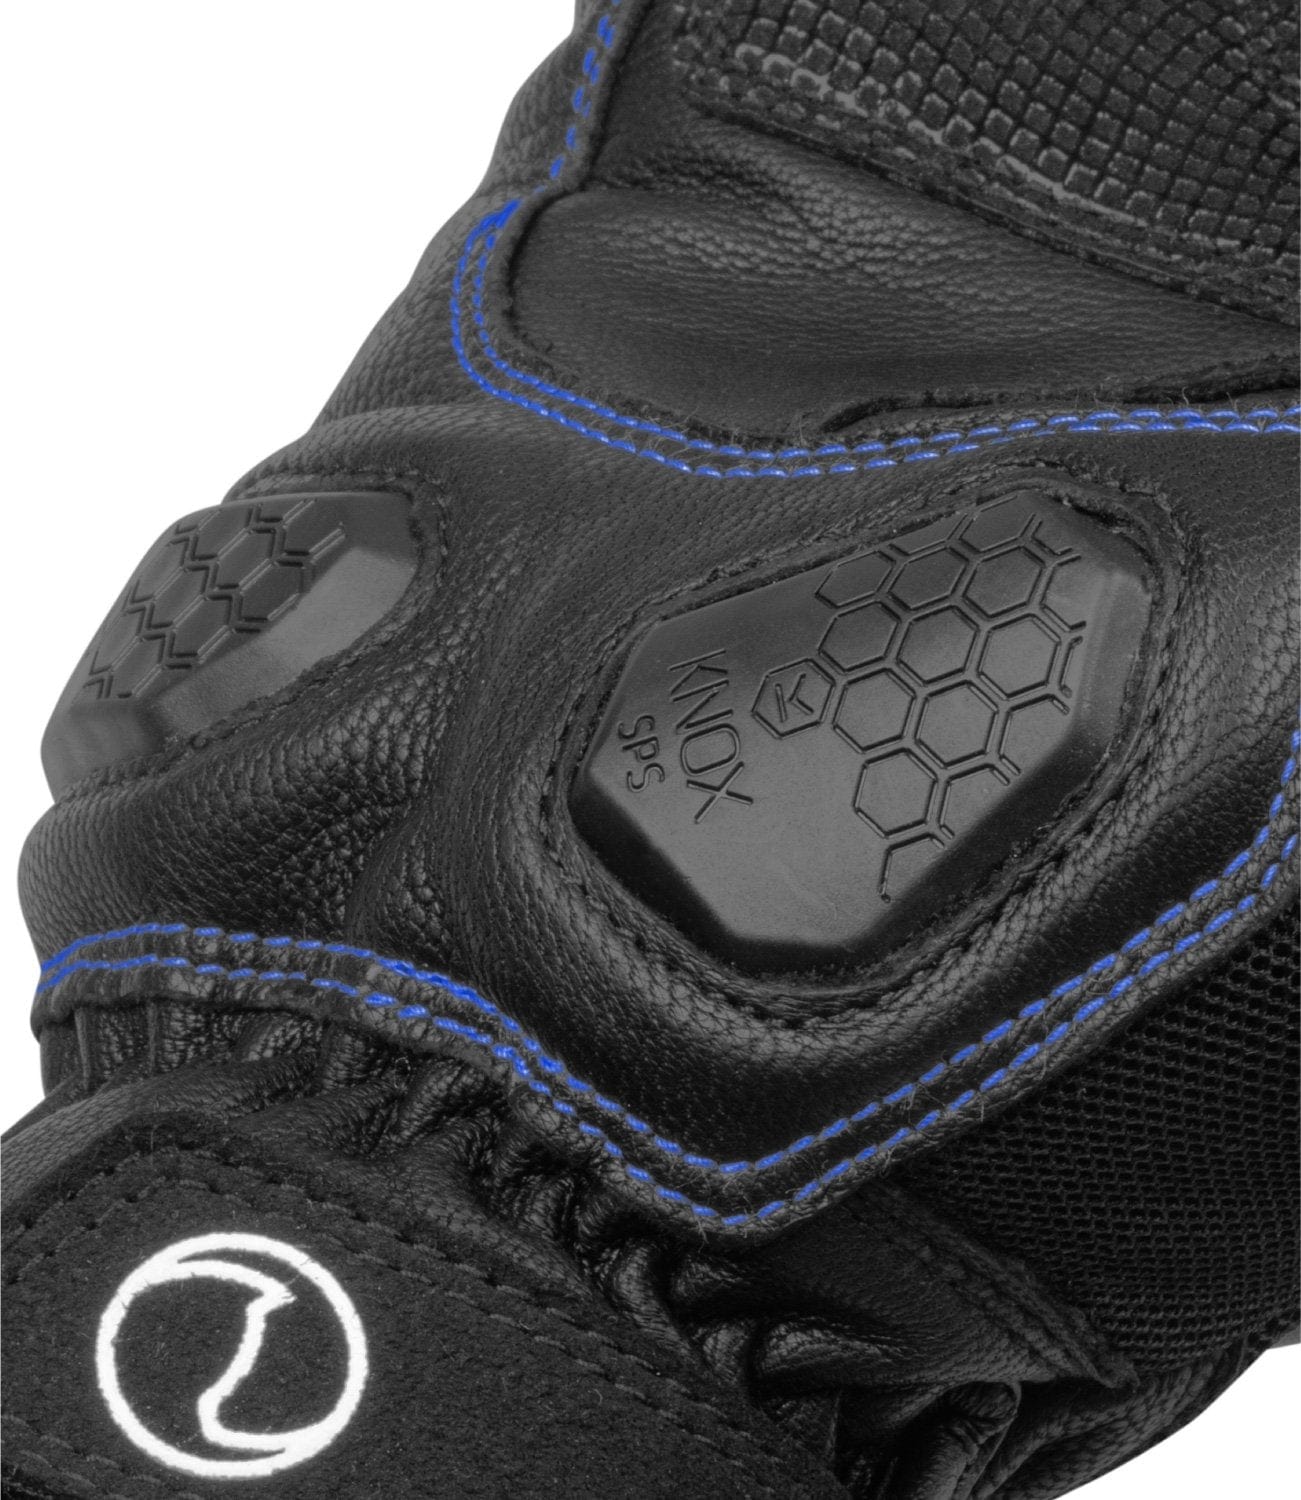 Rynox Tornado Pro 3 Gloves Black Blue - Destination Moto